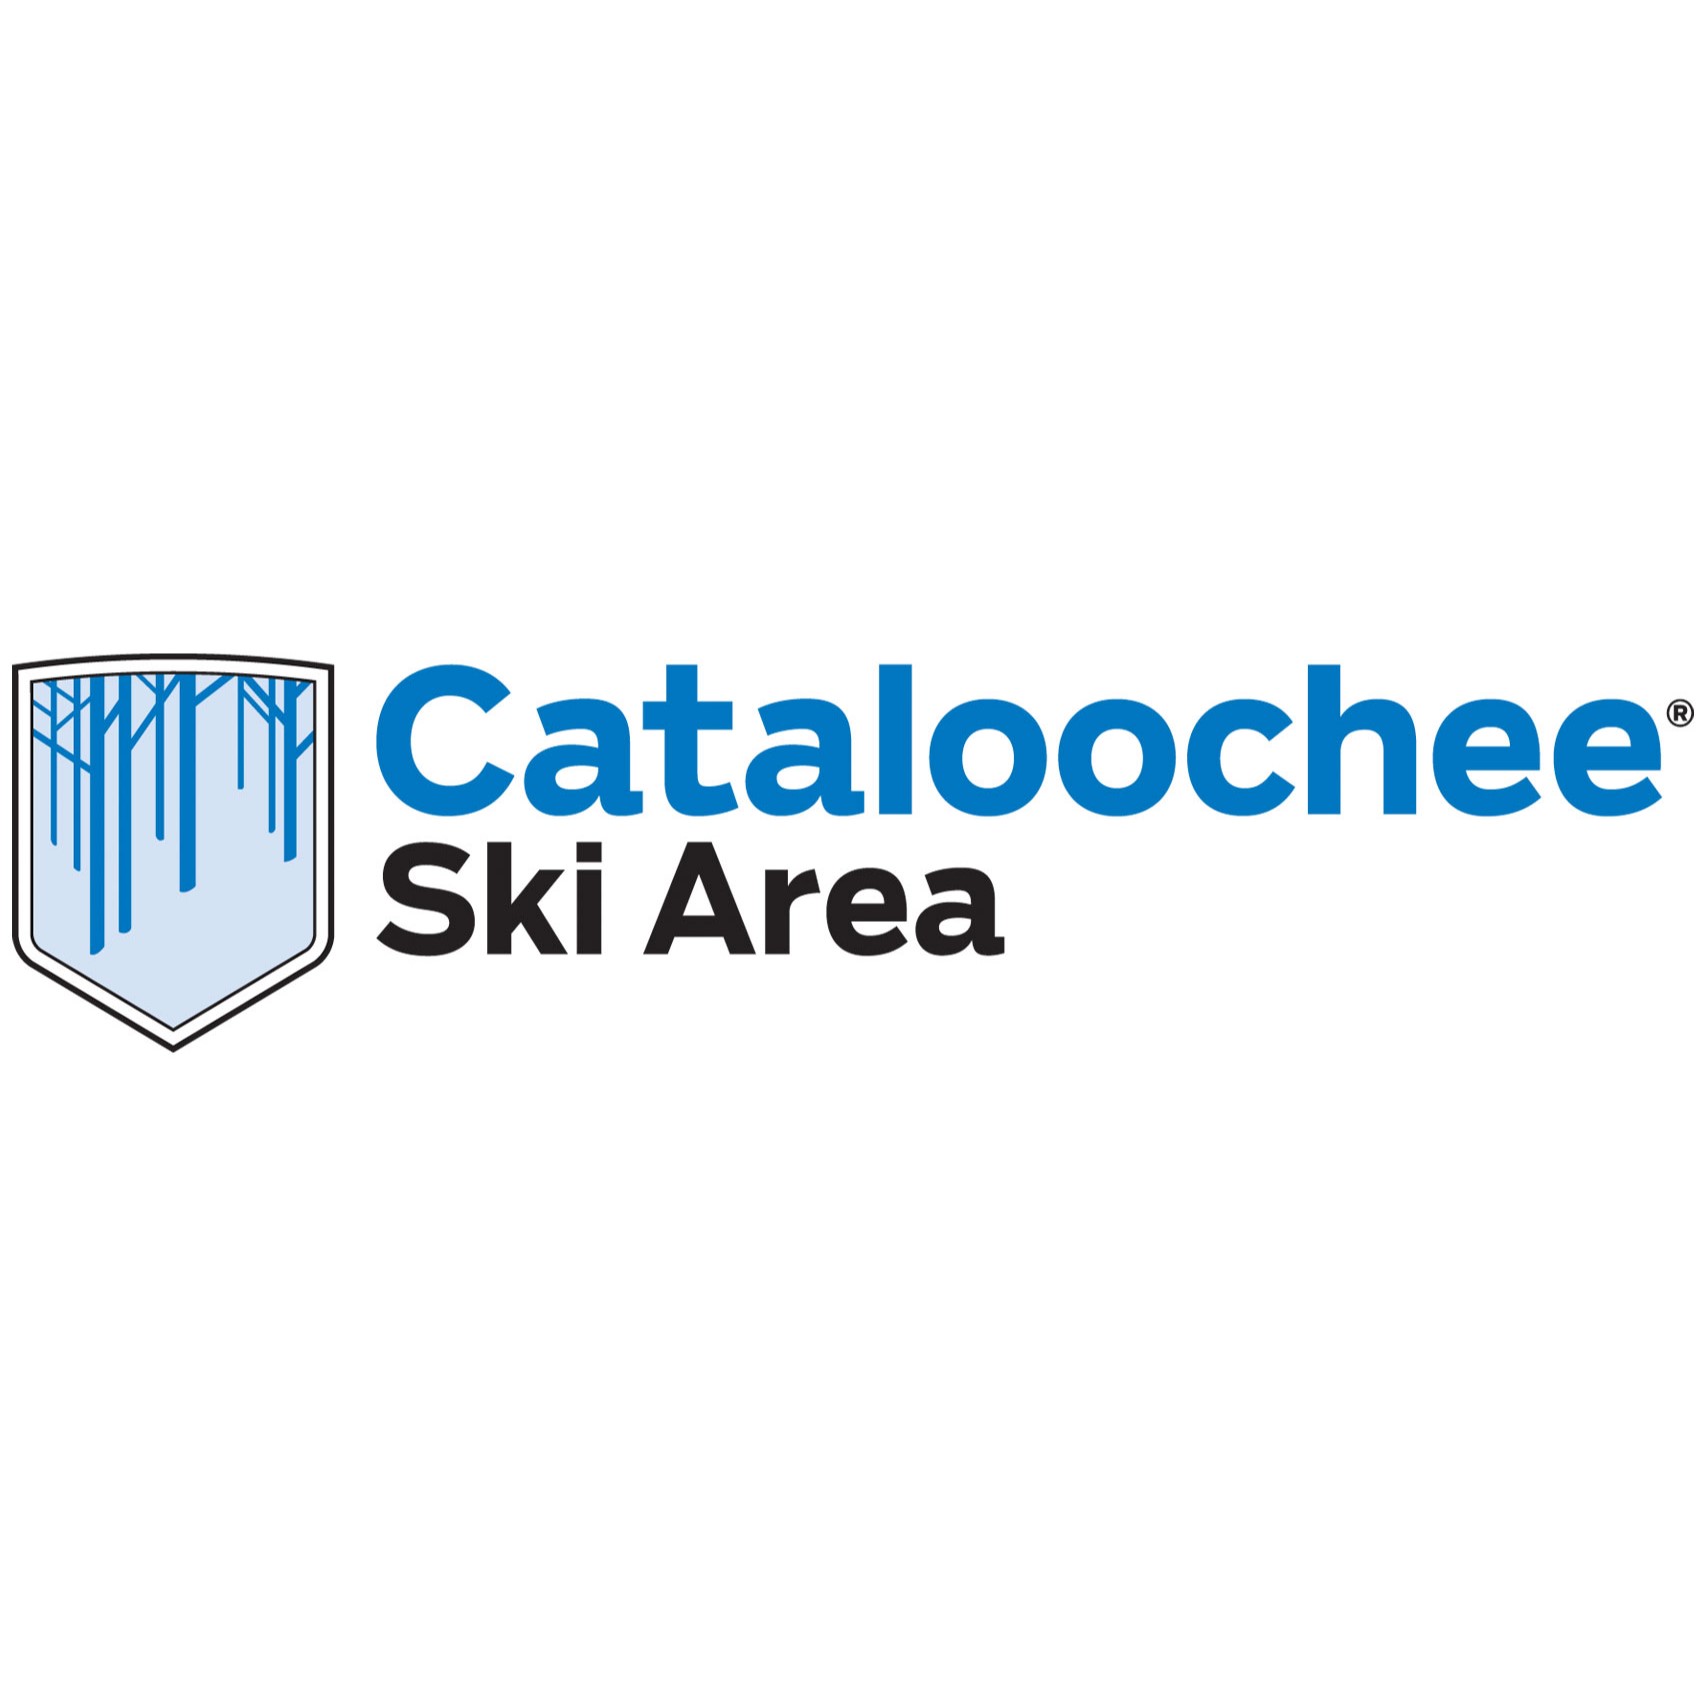 cataloochee-logo.jpg